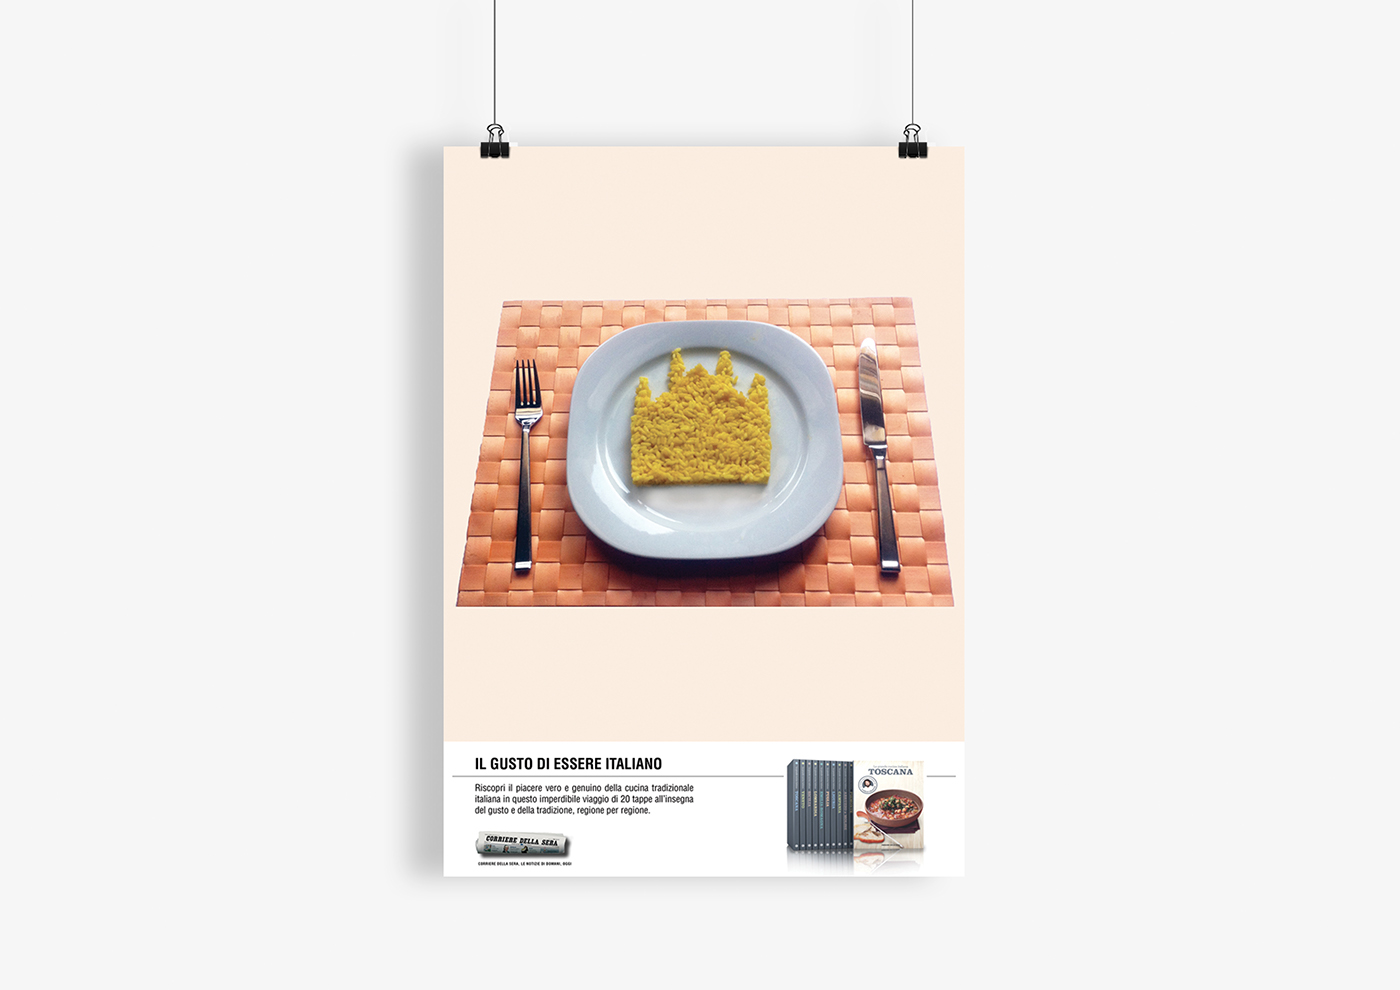 art and copy Communication Design design newspaper food design Italy art direction  Advertising  public adv